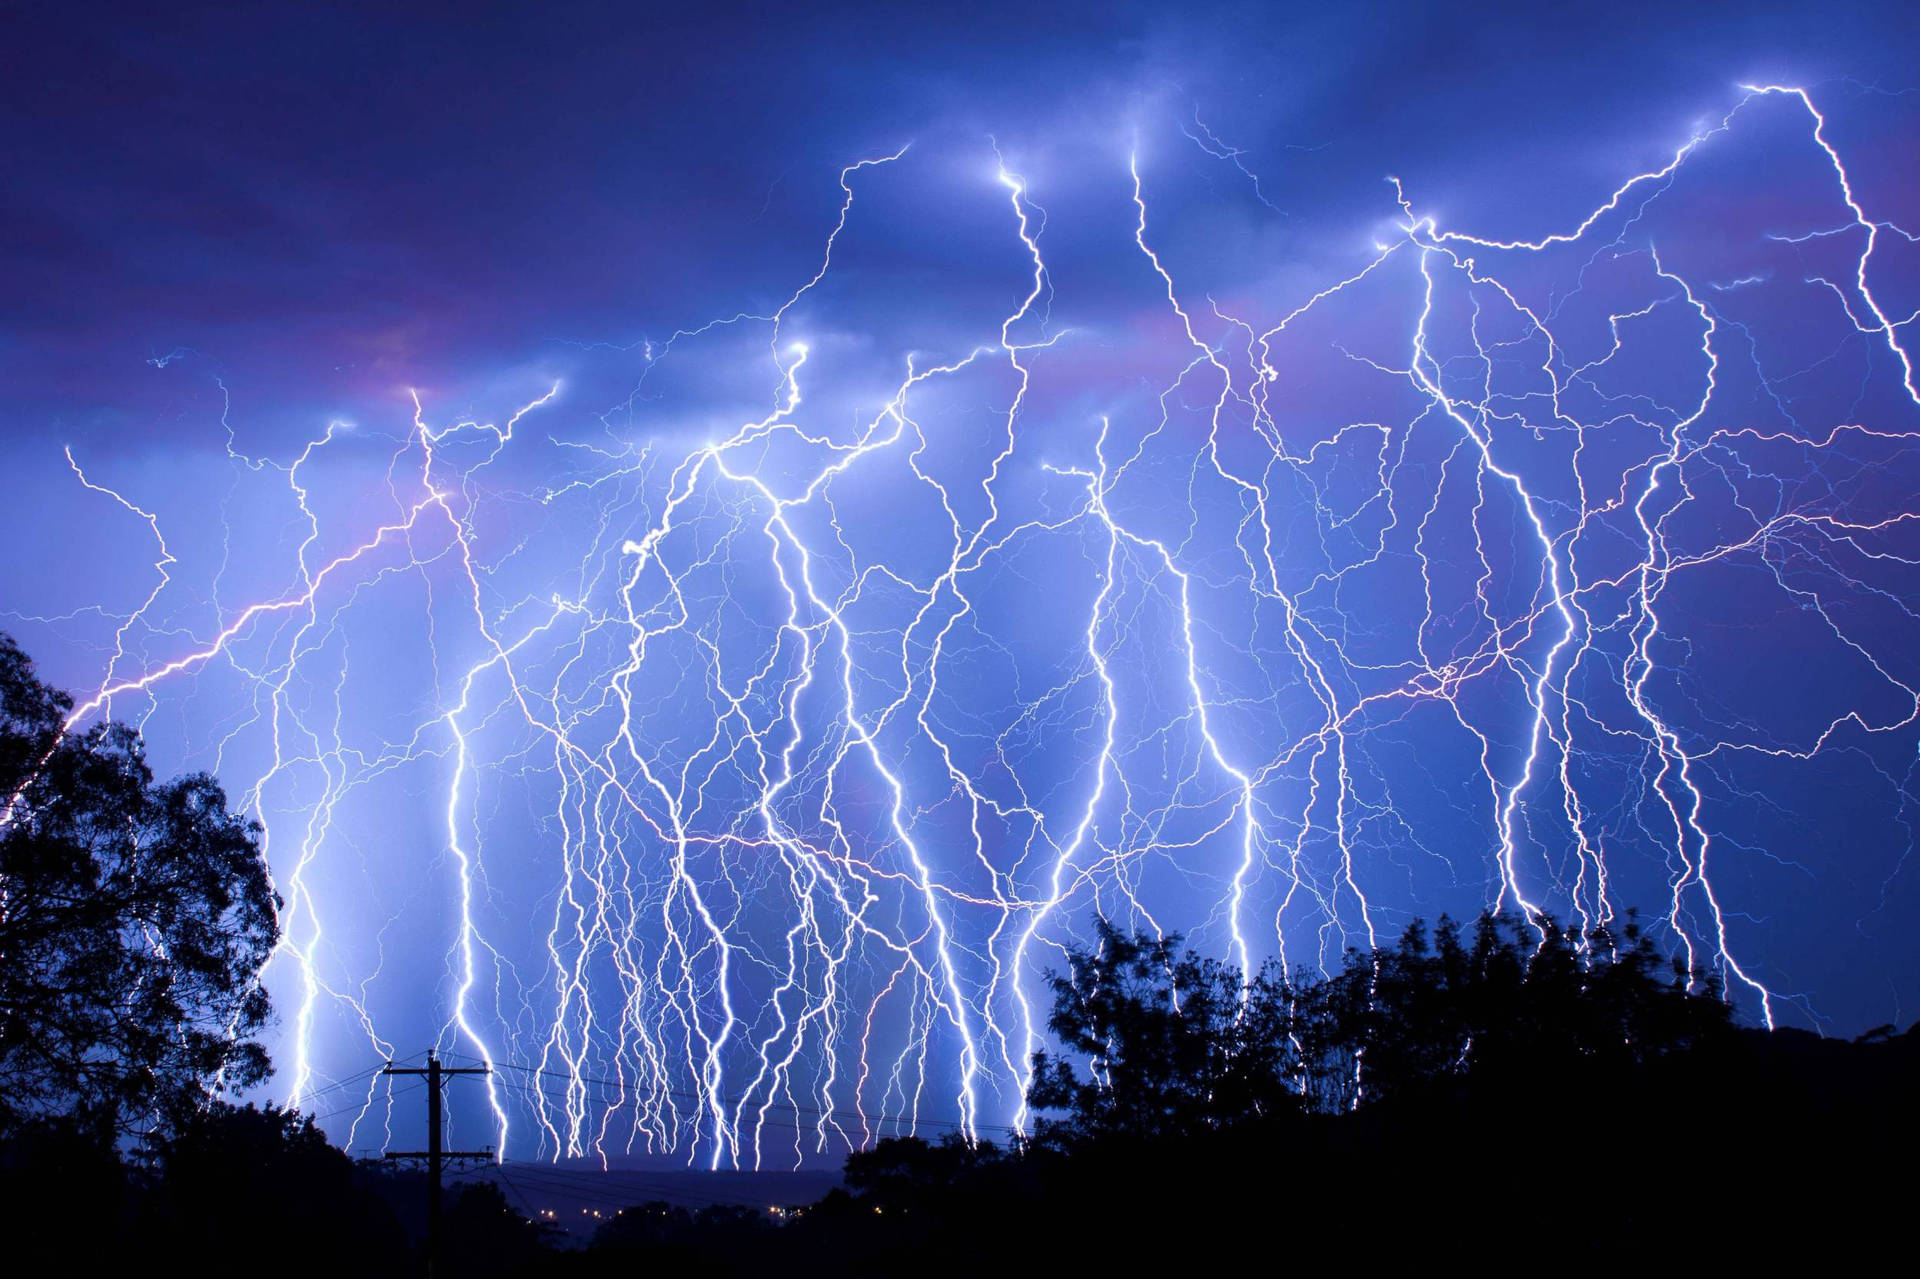 A shot of an eye-catching lightning strike in a night sky Wallpaper